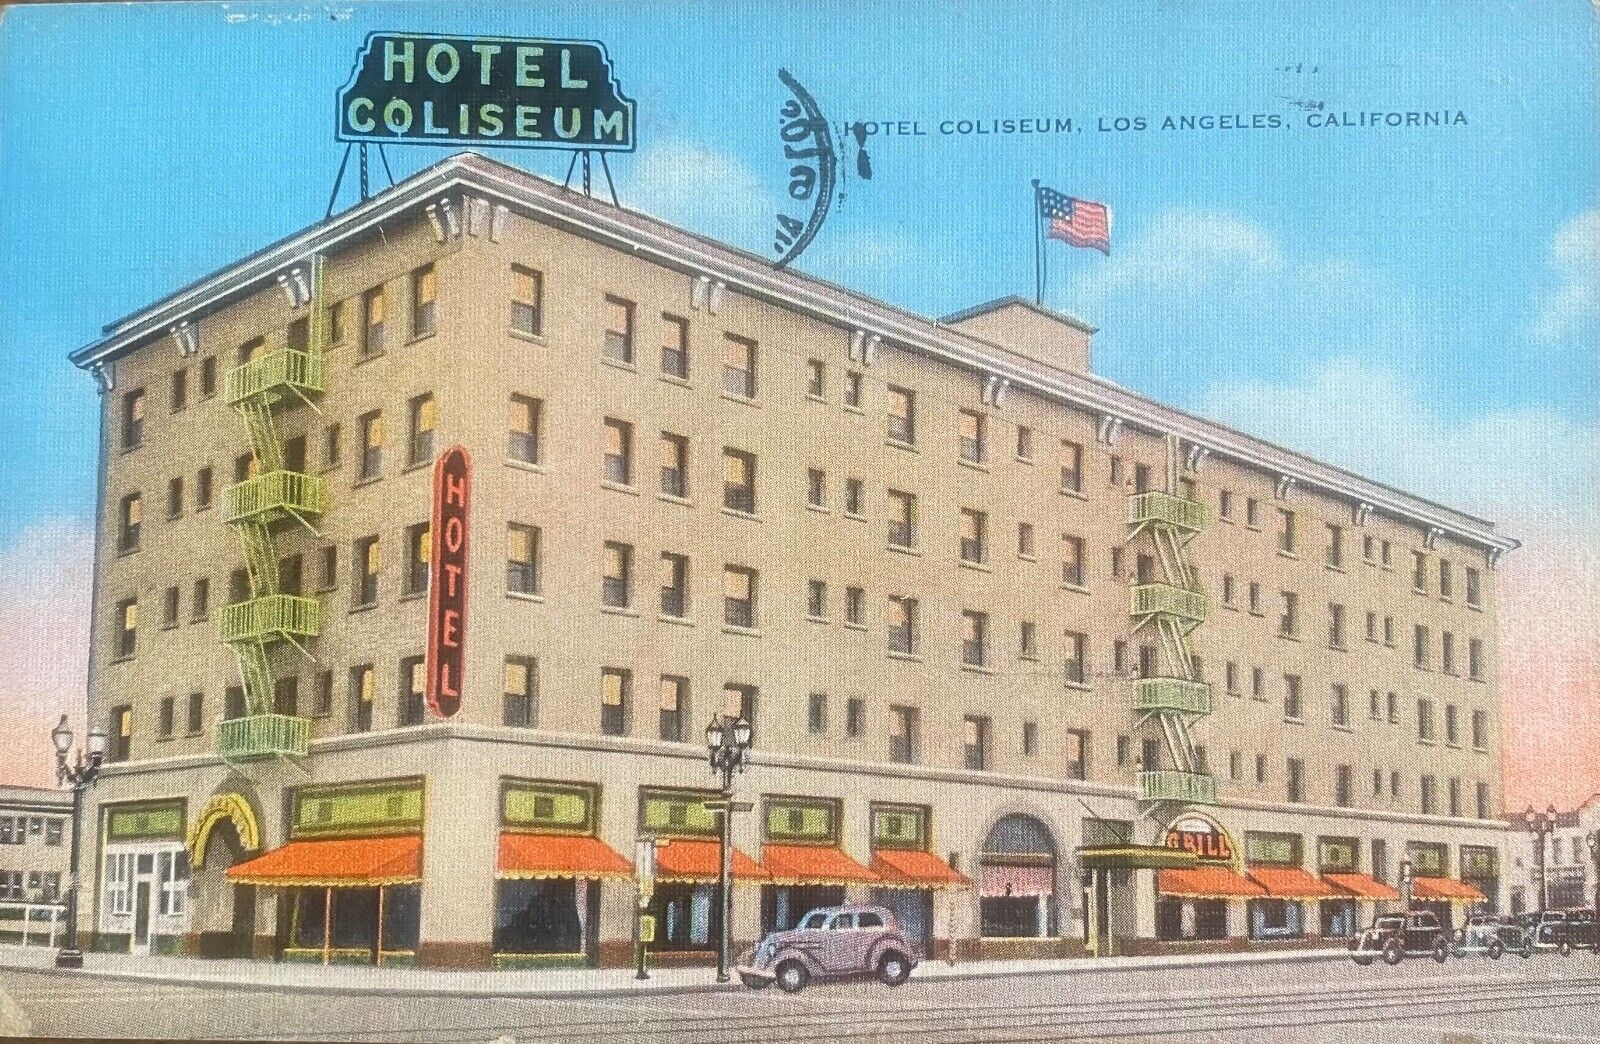 Hotel Coliseum Los Angeles 1939 postcard S.B. Blvd. @ Figueroa